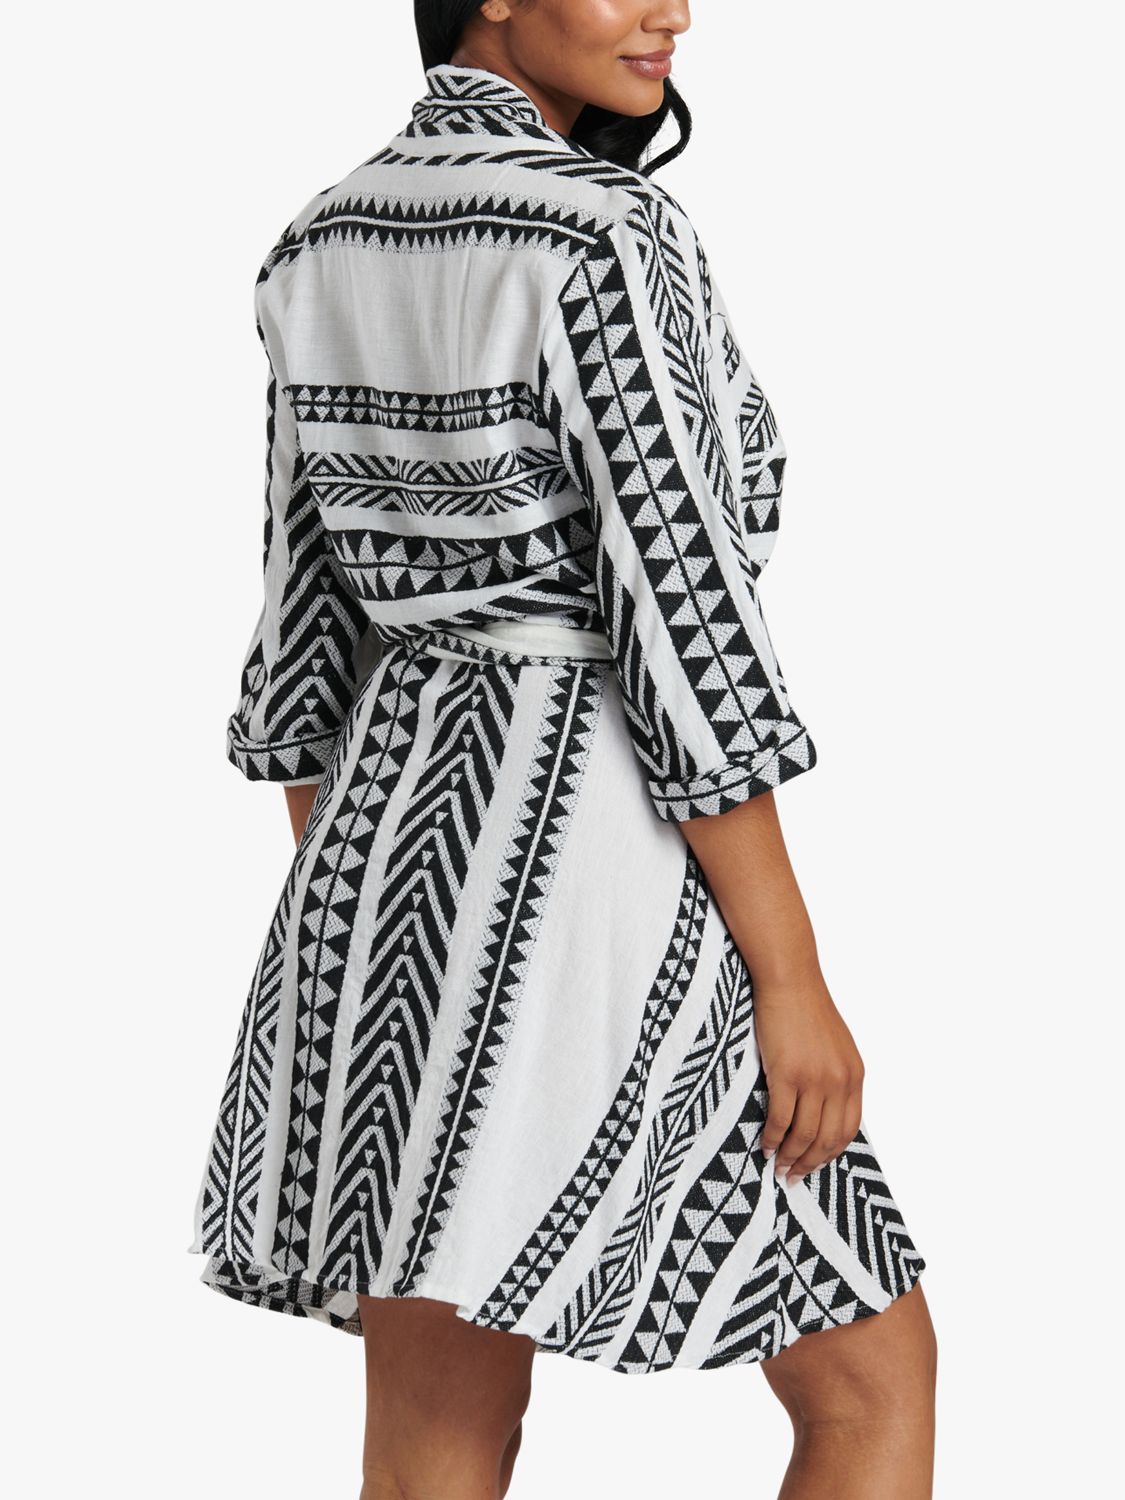 South Beach Jacquard Tie Waist Mini Dress, Black/White, 12